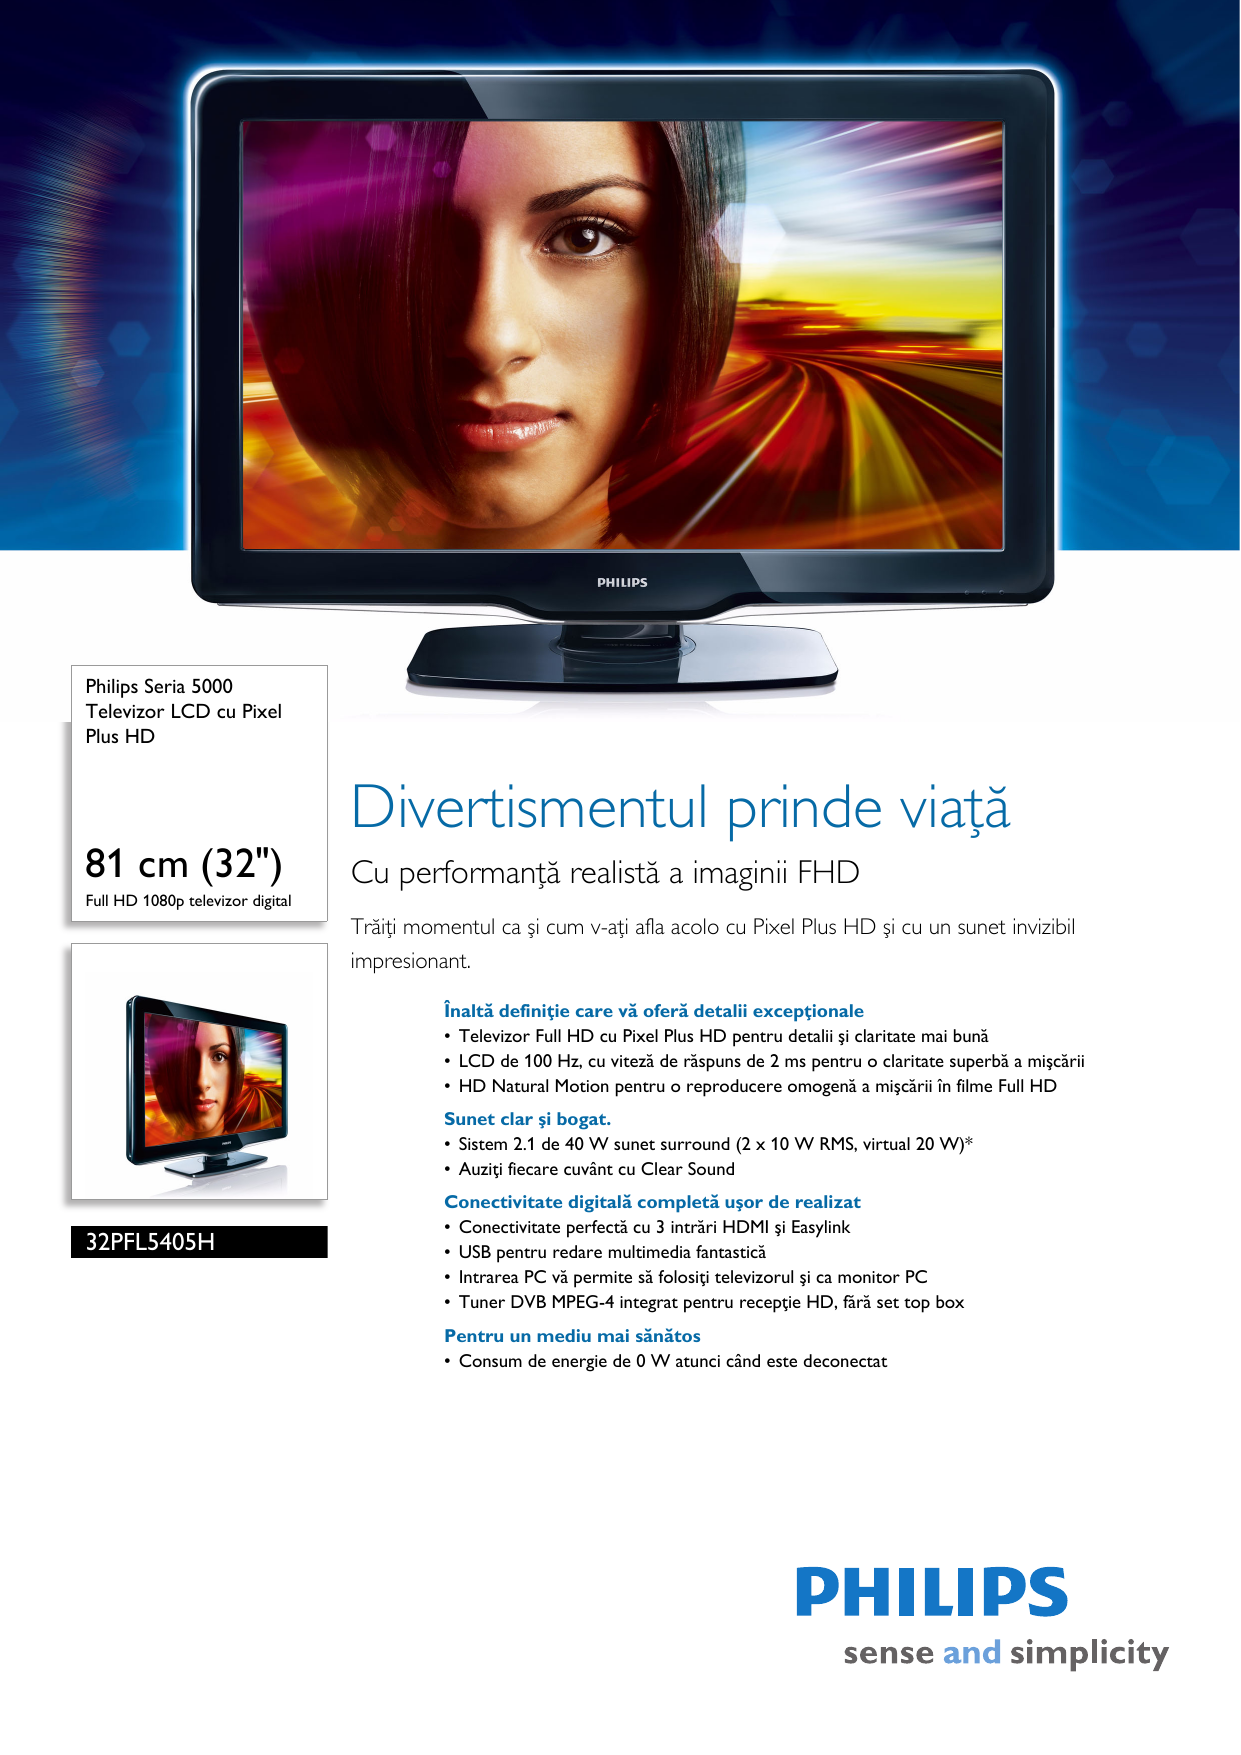 Page 1 of 3 - Philips 32PFL5405H/12 Televizor LCD Cu Pixel Plus HD User Manual Pliant 32pfl5405h 12 Pss Ronro